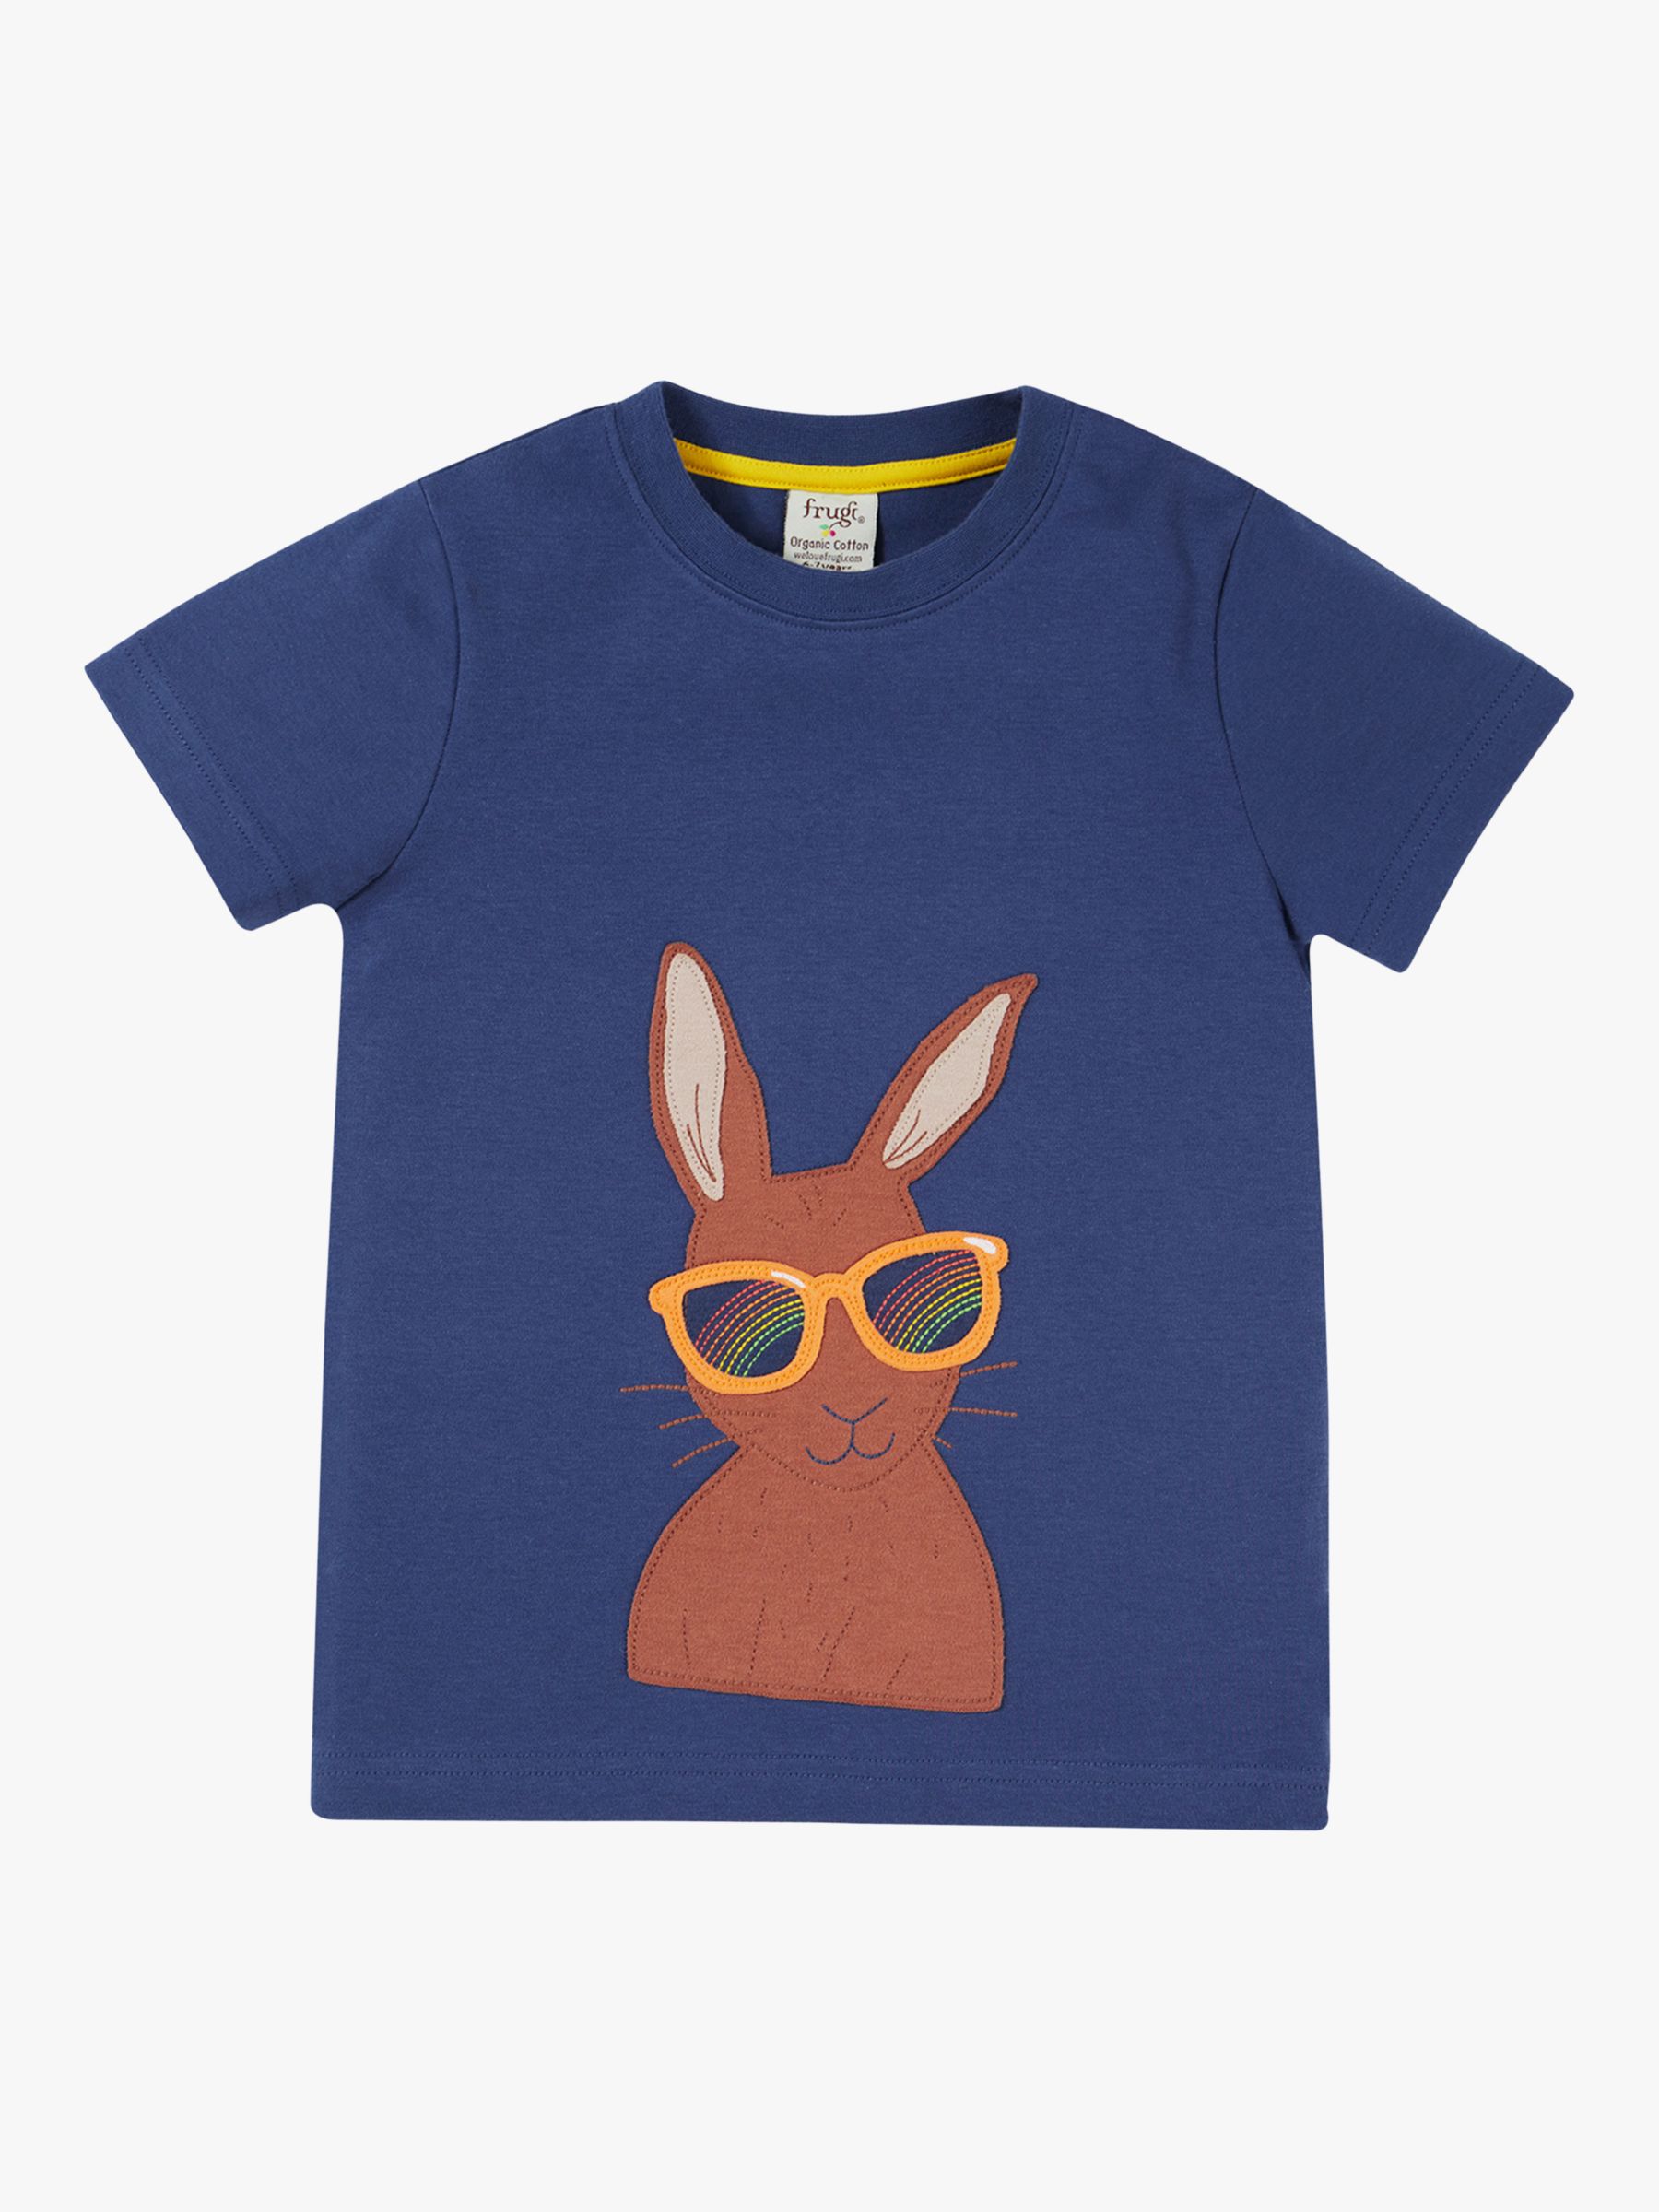 Frugi Kids' Carsen Organic Cotton Hare Applique T-Shirt, Navy Blue, 4-5 years